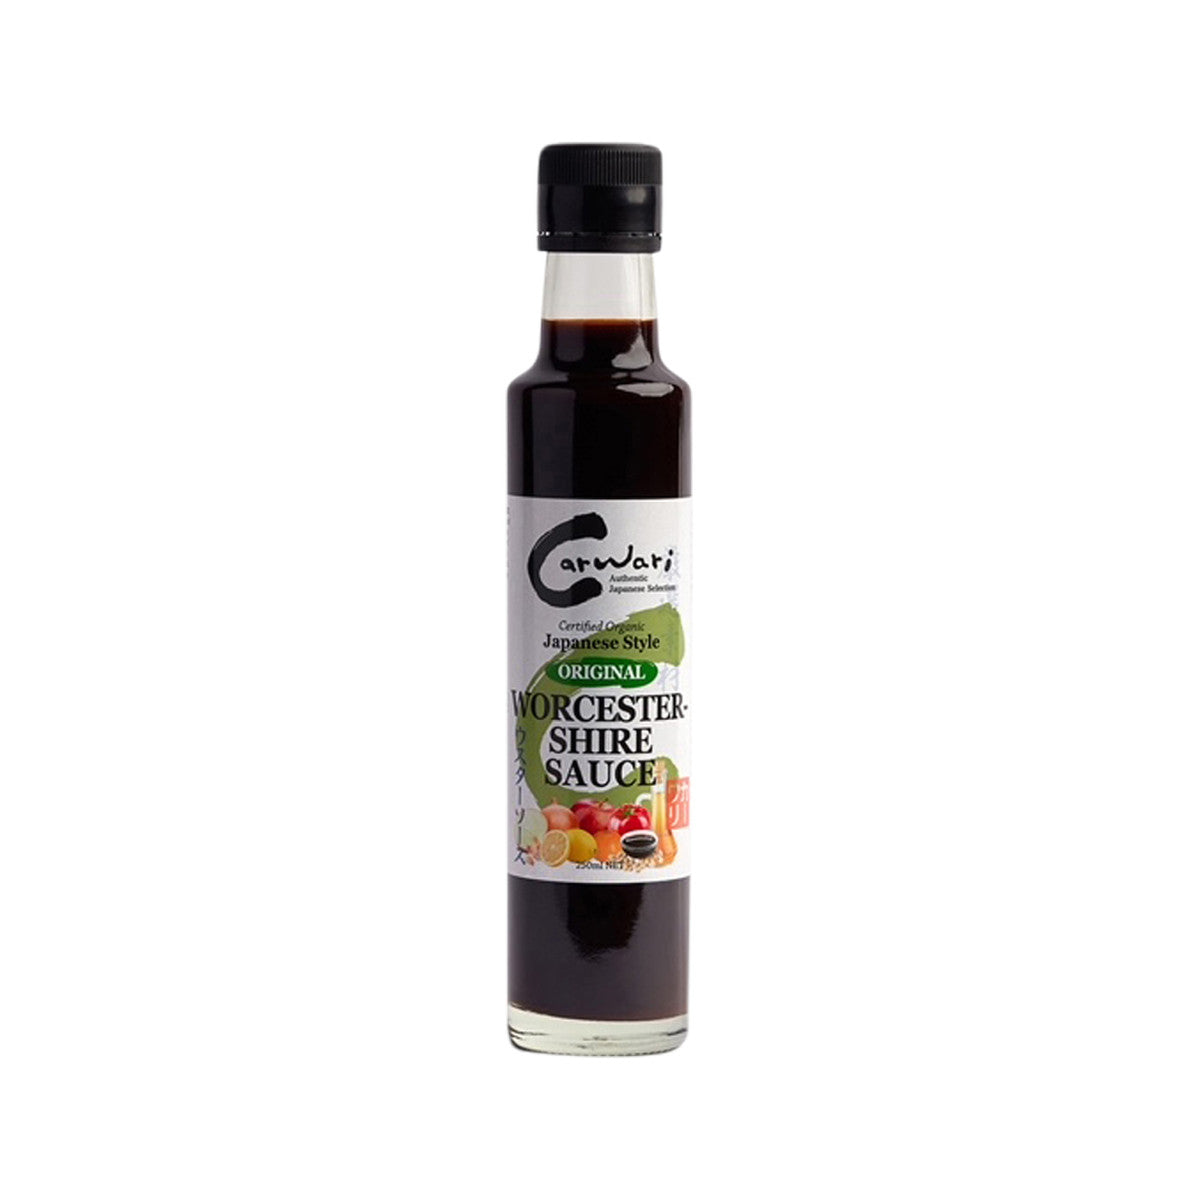 Carwari - Organic Worcestershire Sauce